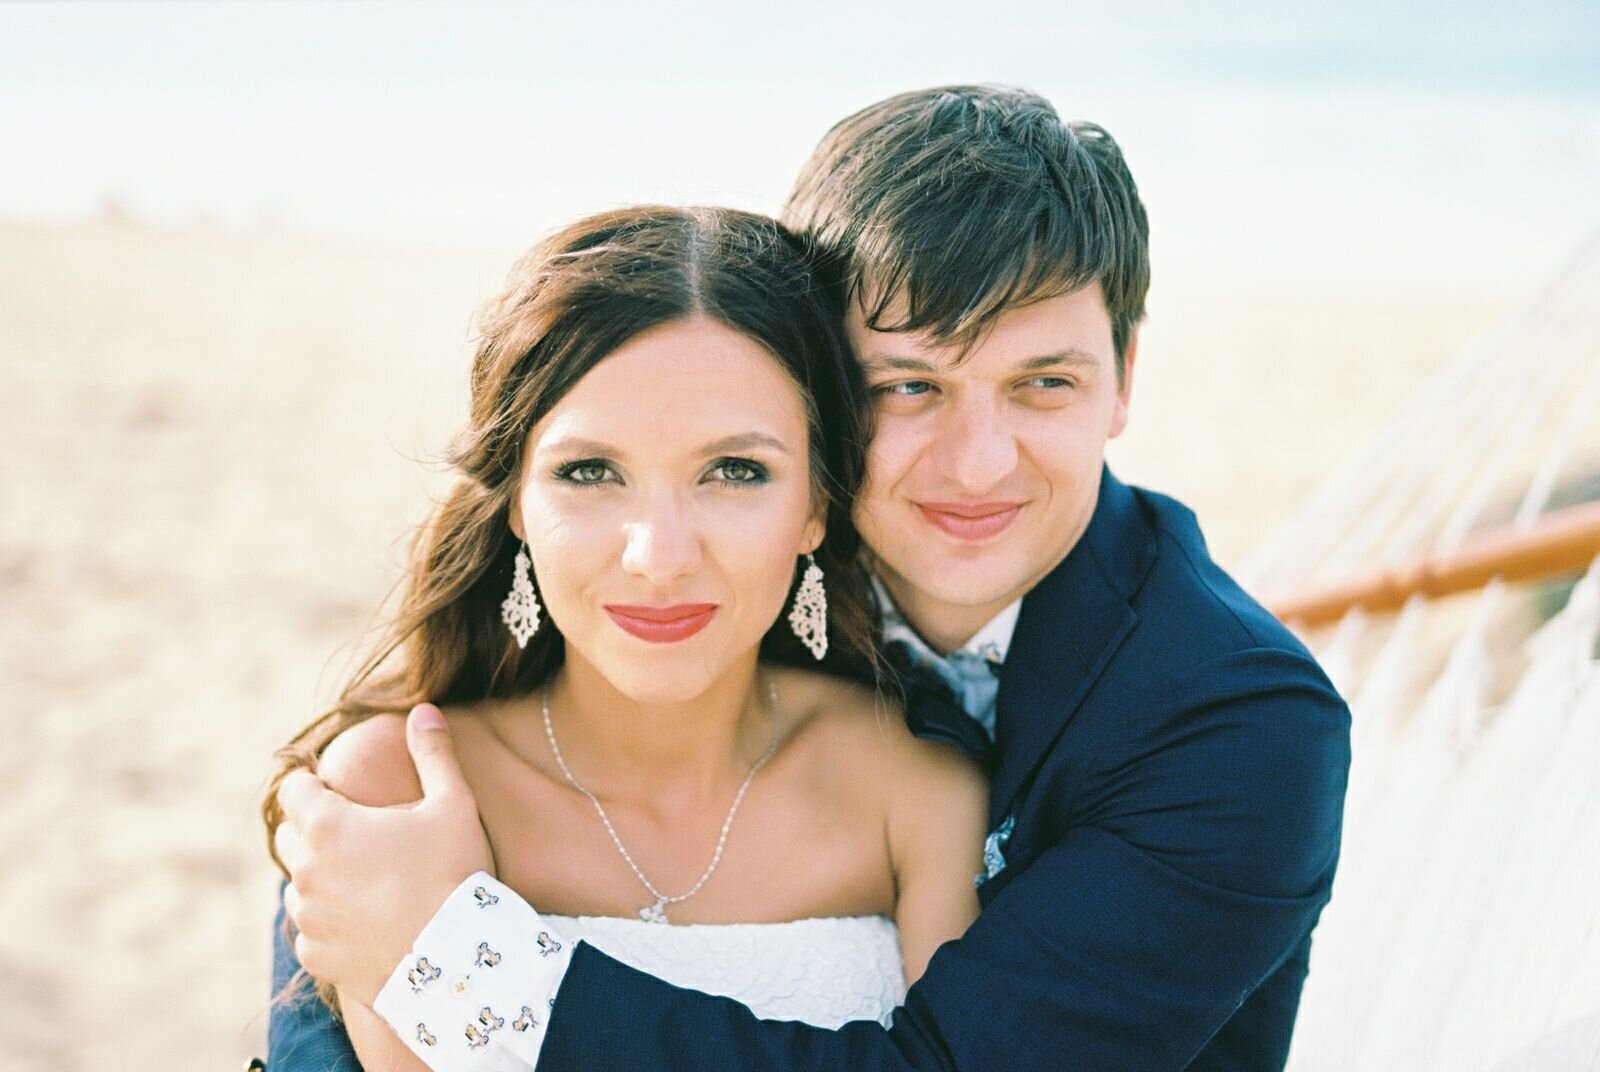 Punta cana Beach Wedding - bride and groom